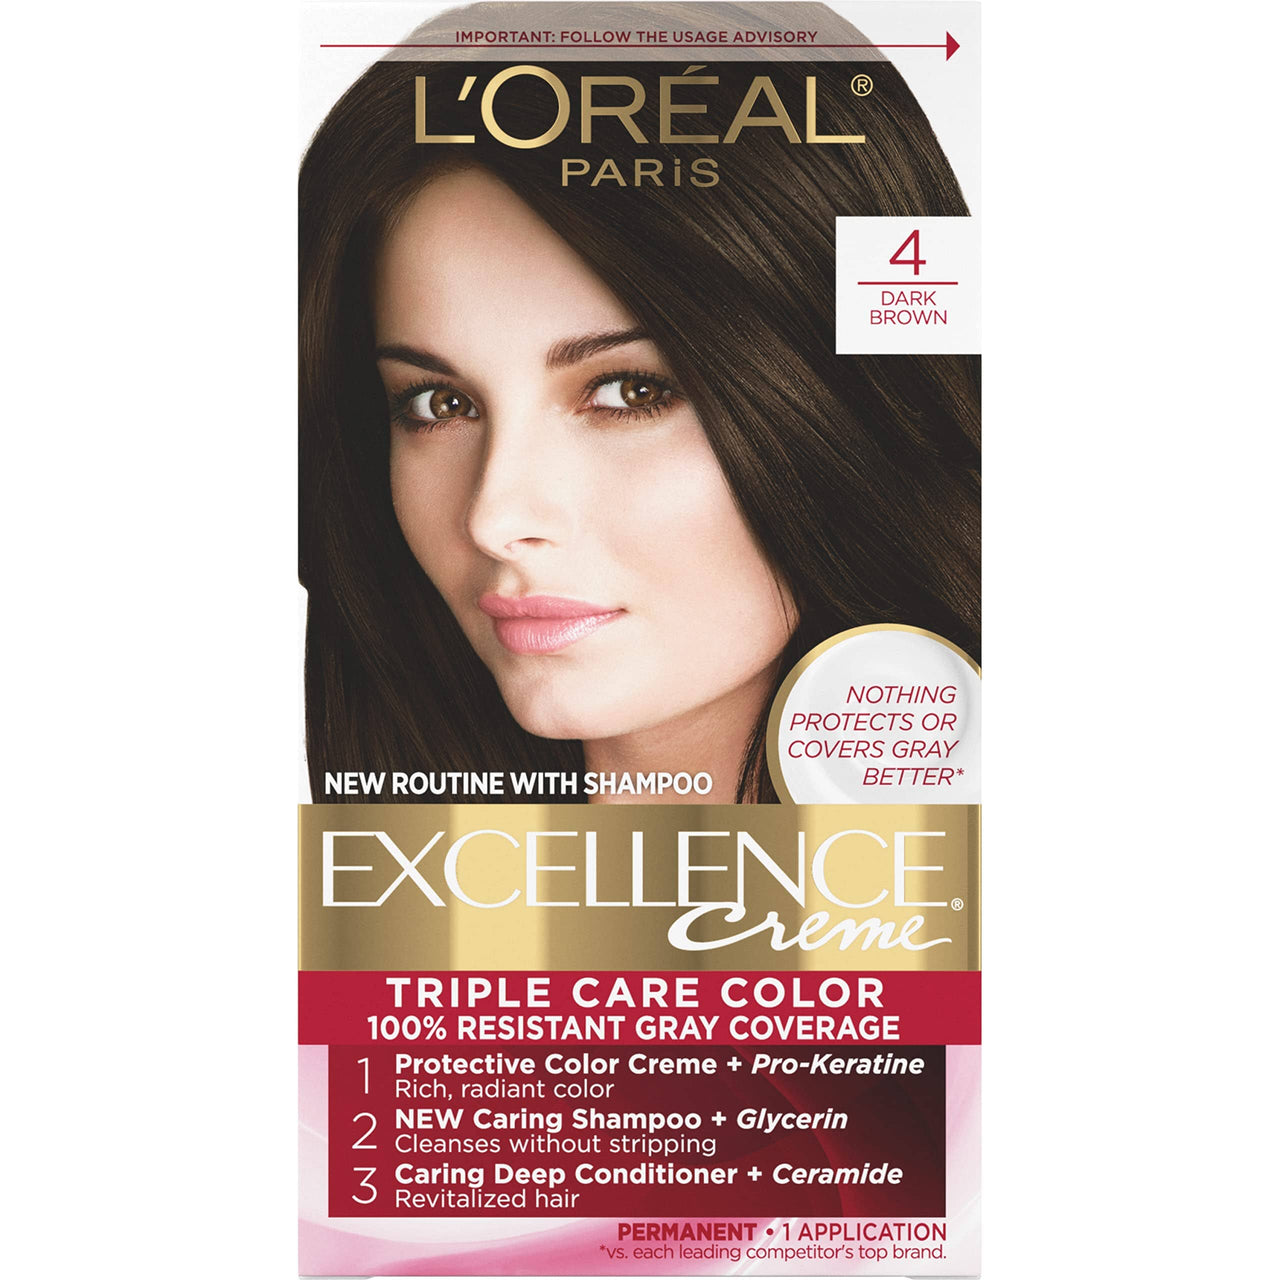 L'Oreal Paris L'Oreal Paris Excellence Creme Permanent Hair Color, 4 Dark Brown, 100 percent Gray Coverage Hair Dye, Pack of 1